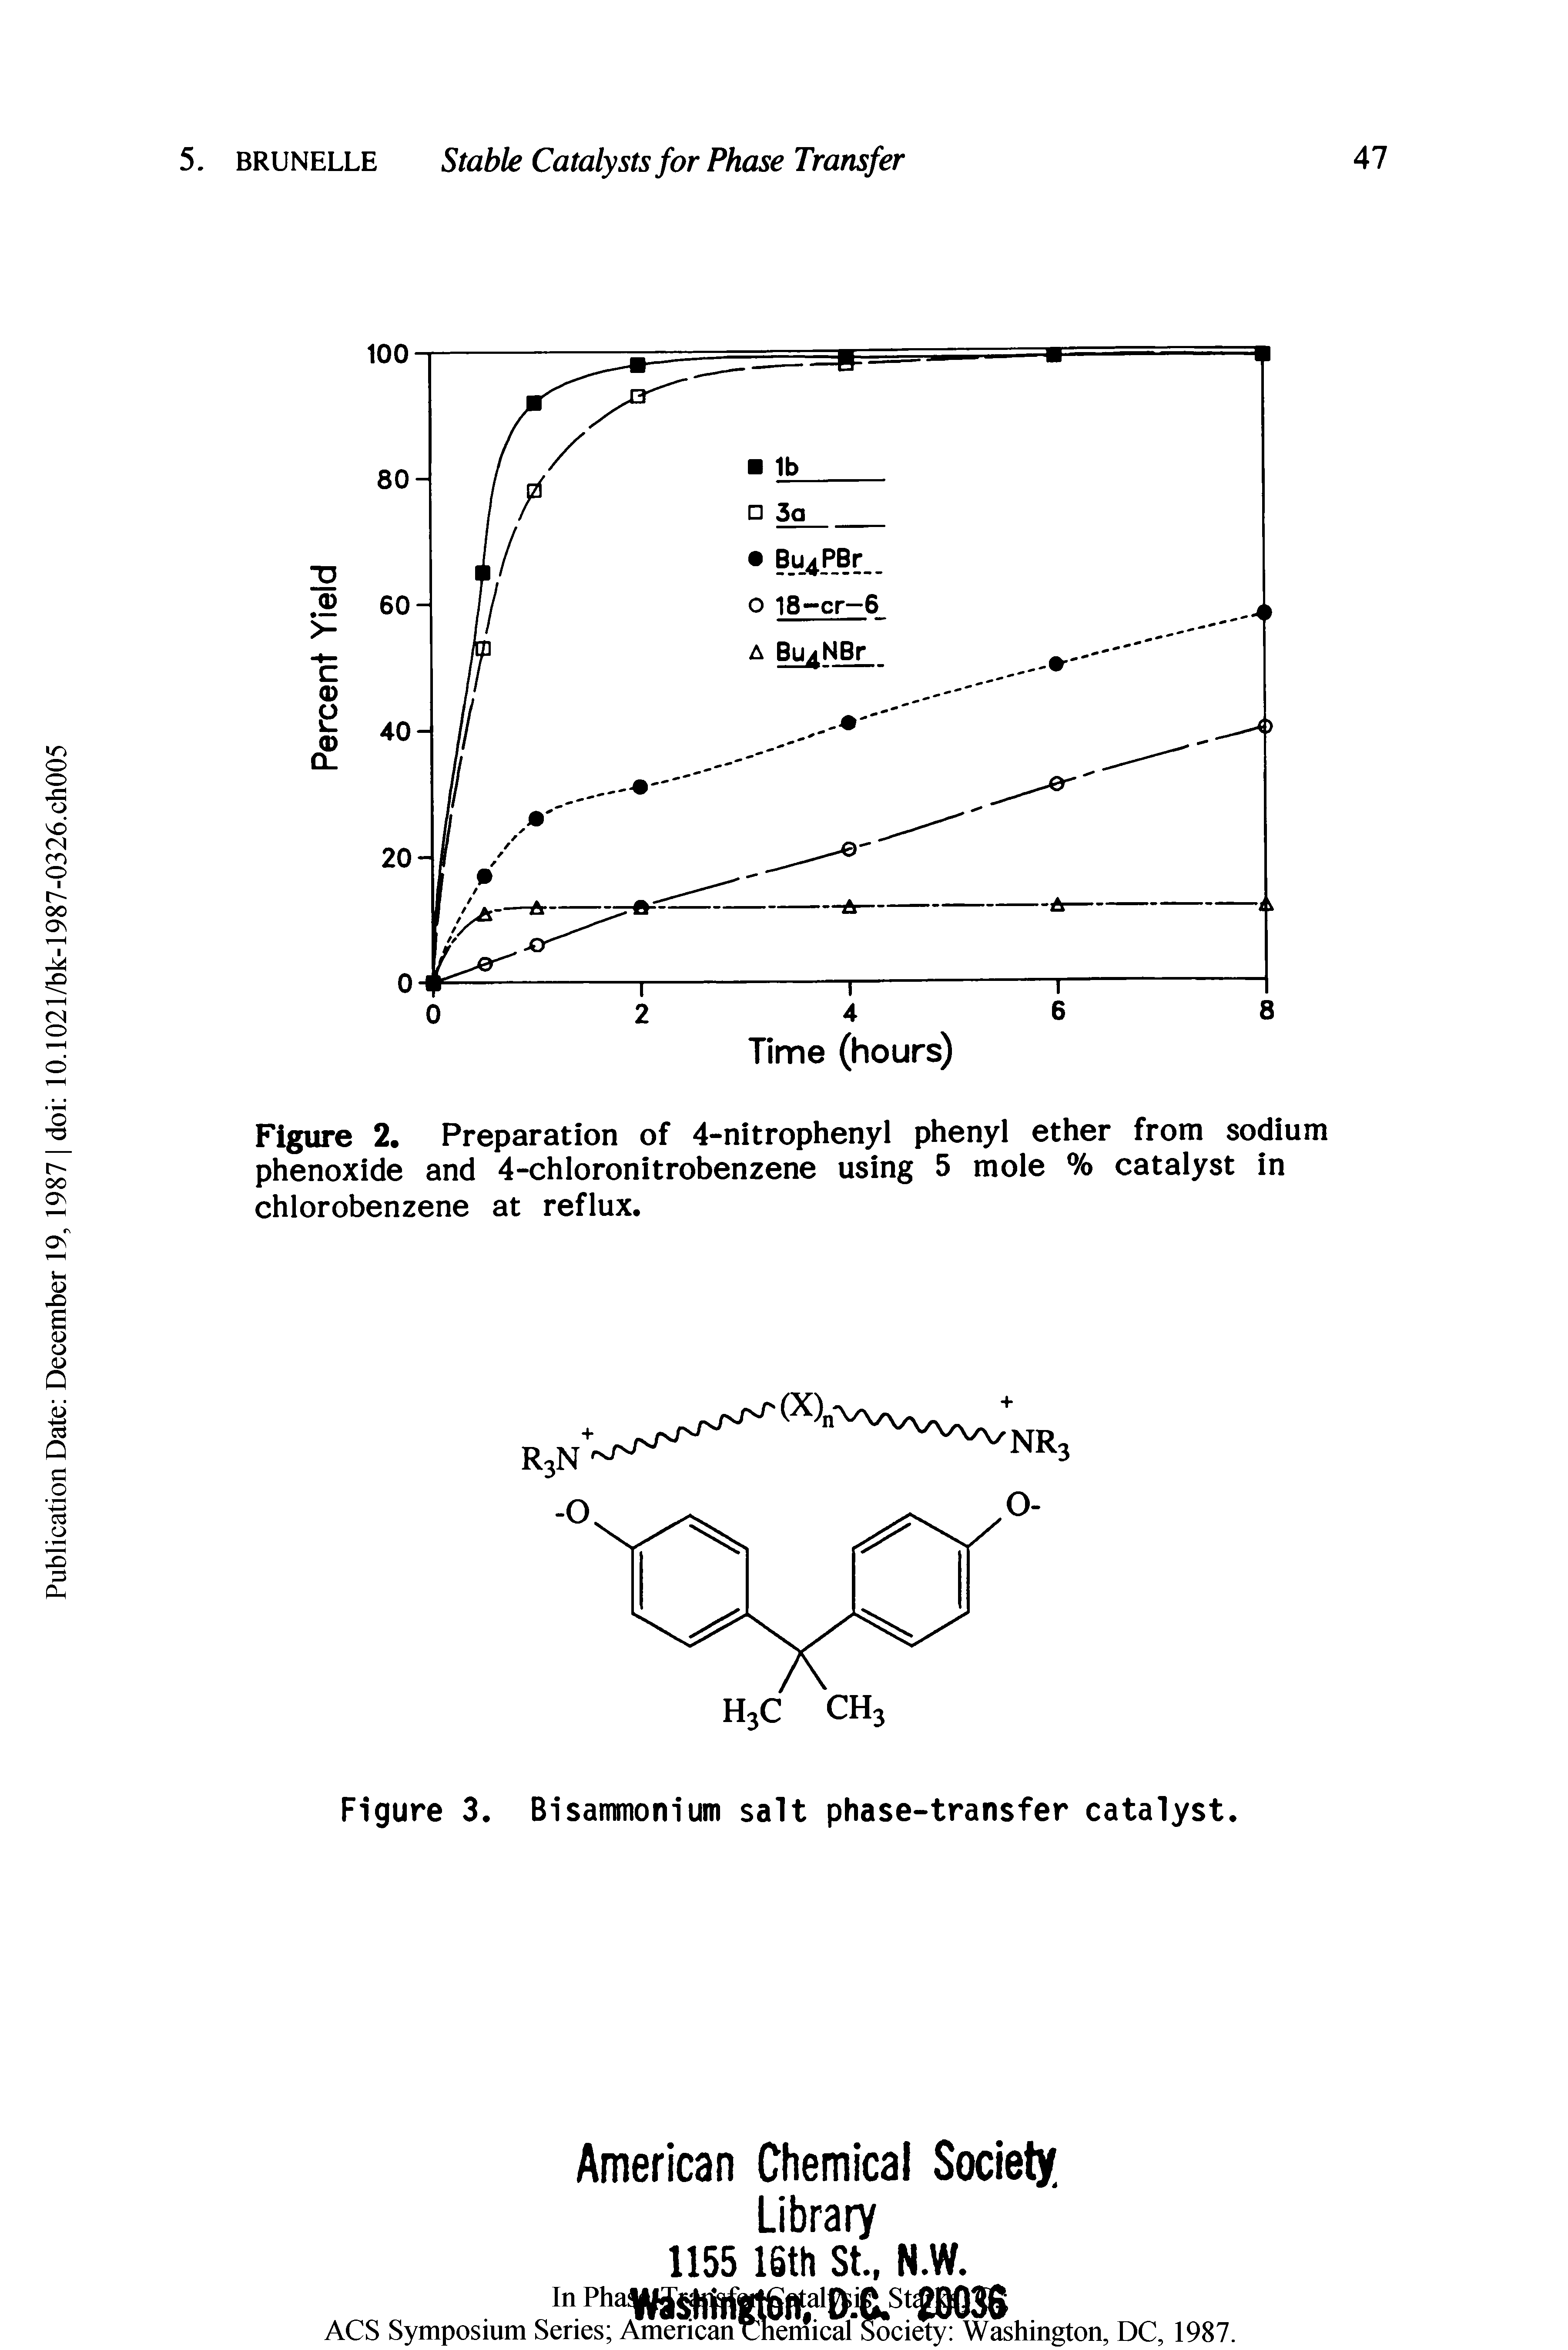 Figure 2. Preparation of 4-nitrophenyl phenyl ether from sodium phenoxide and 4-chIoronitrobenzene using 5 mole % catalyst in chlorobenzene at reflux.